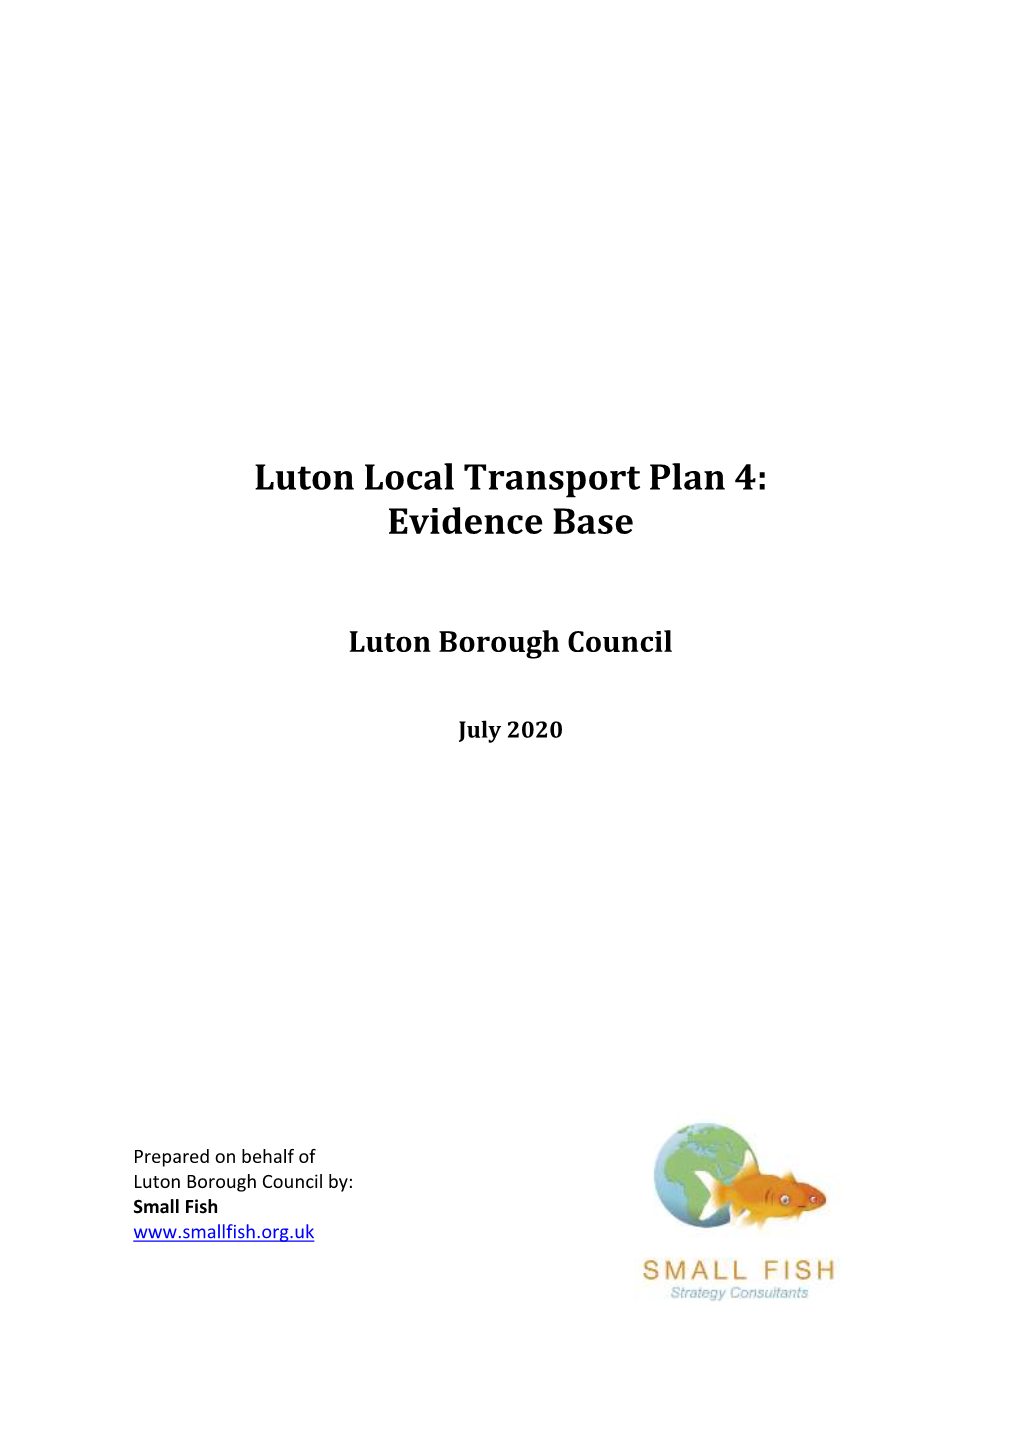 Luton Local Transport Plan 4: Evidence Base